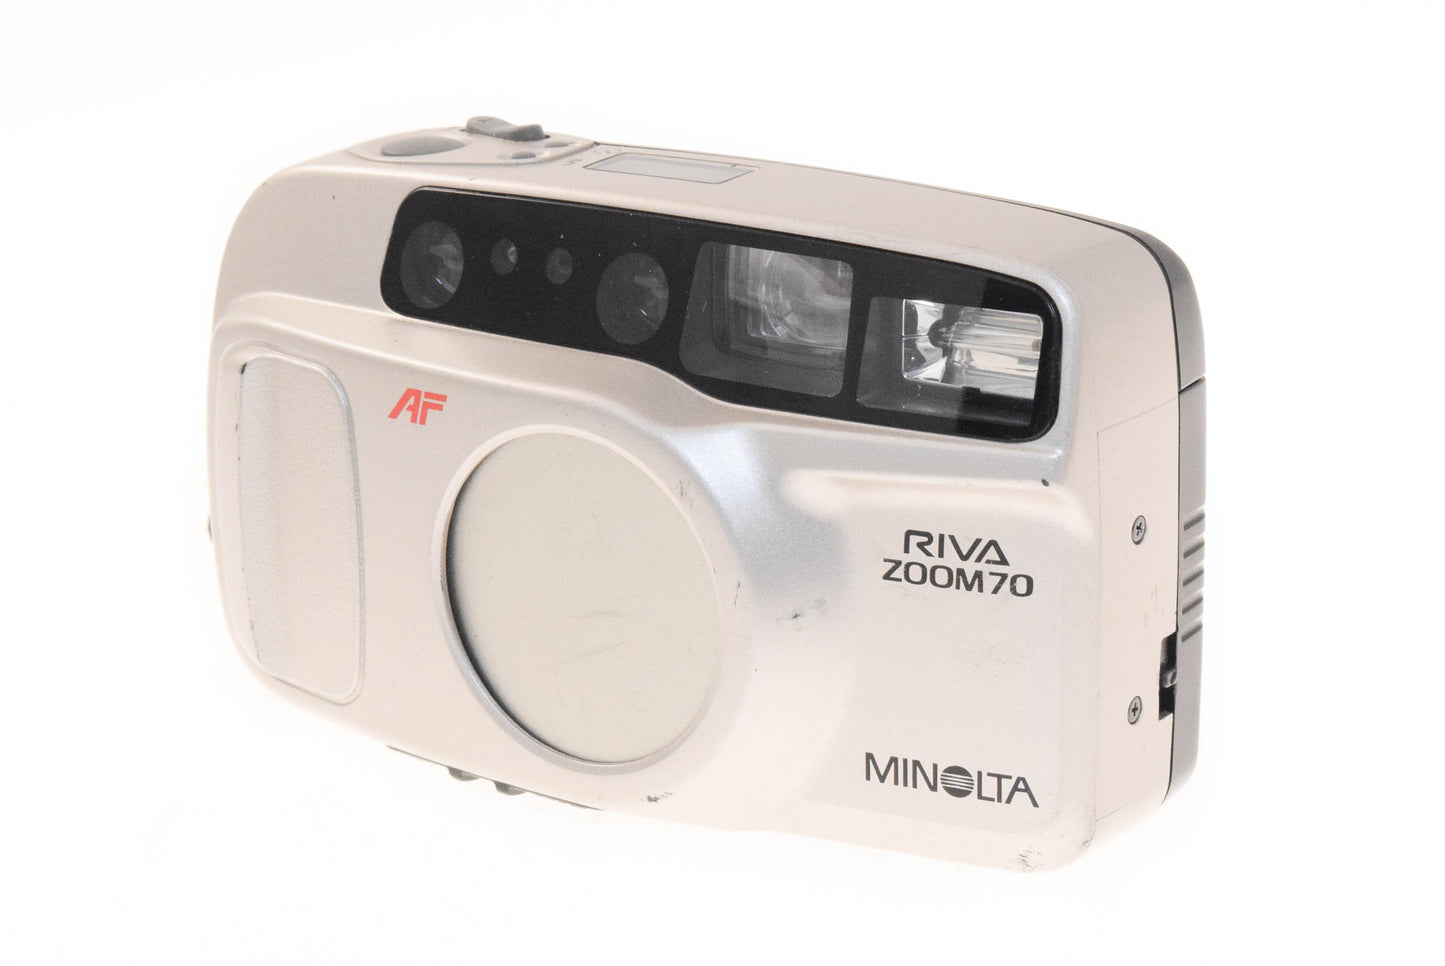 Minolta Riva Zoom 70 - Camera